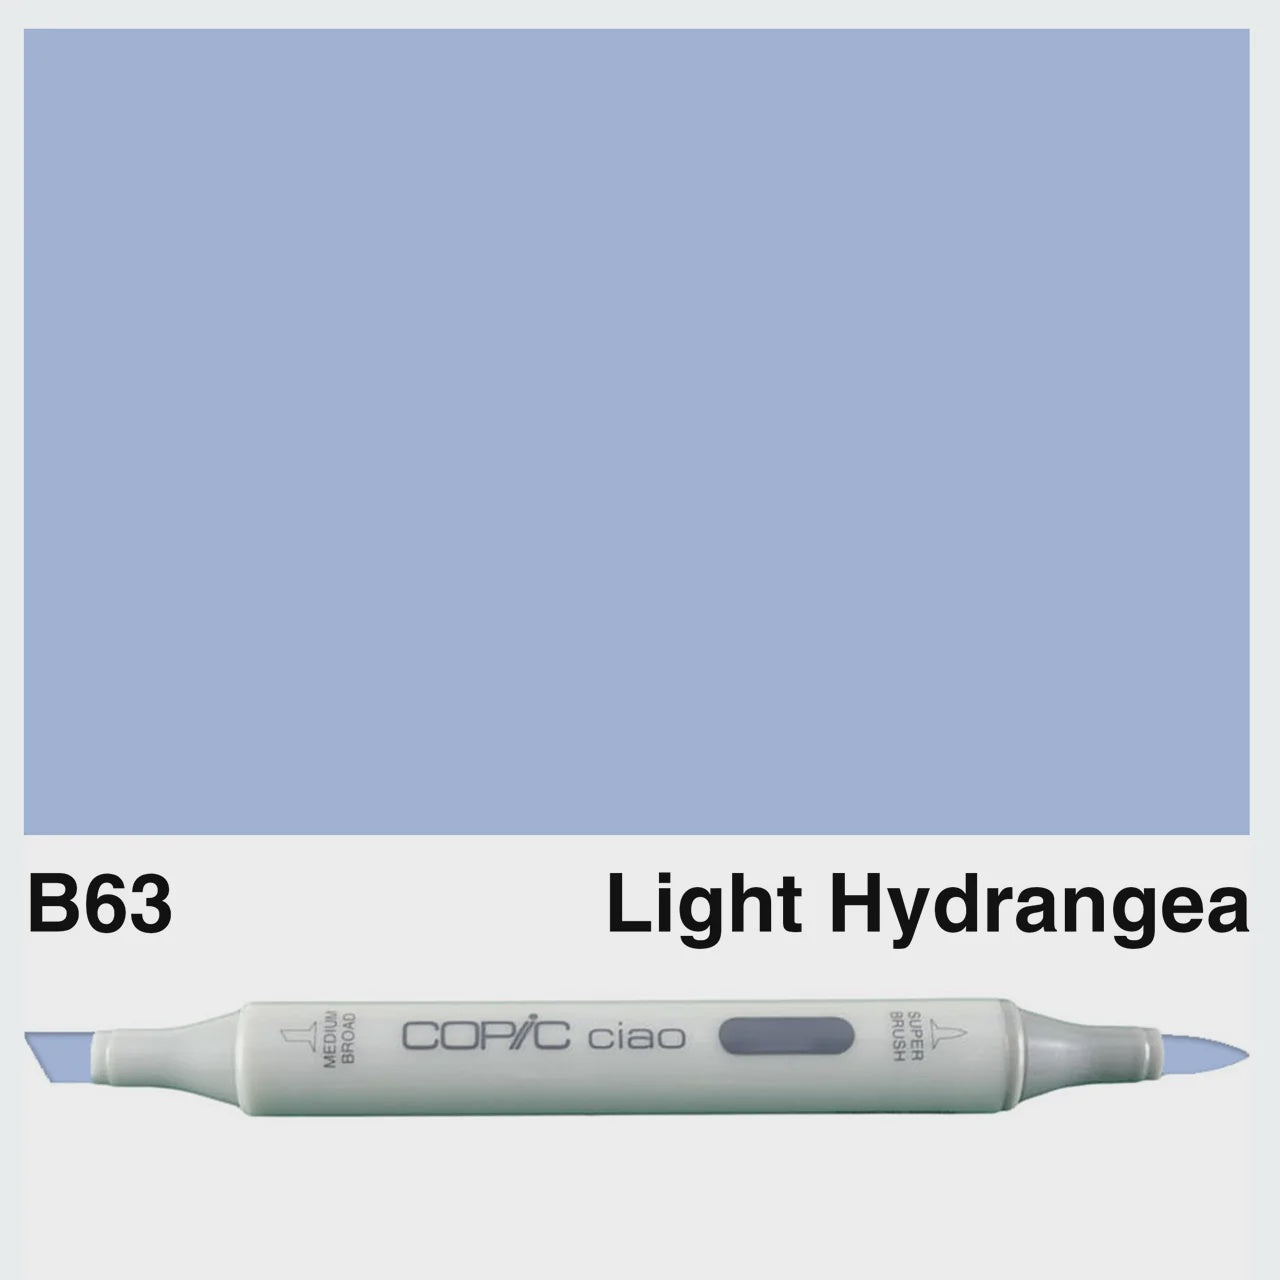 CIAO B63 LIGHT HYDRANGEA